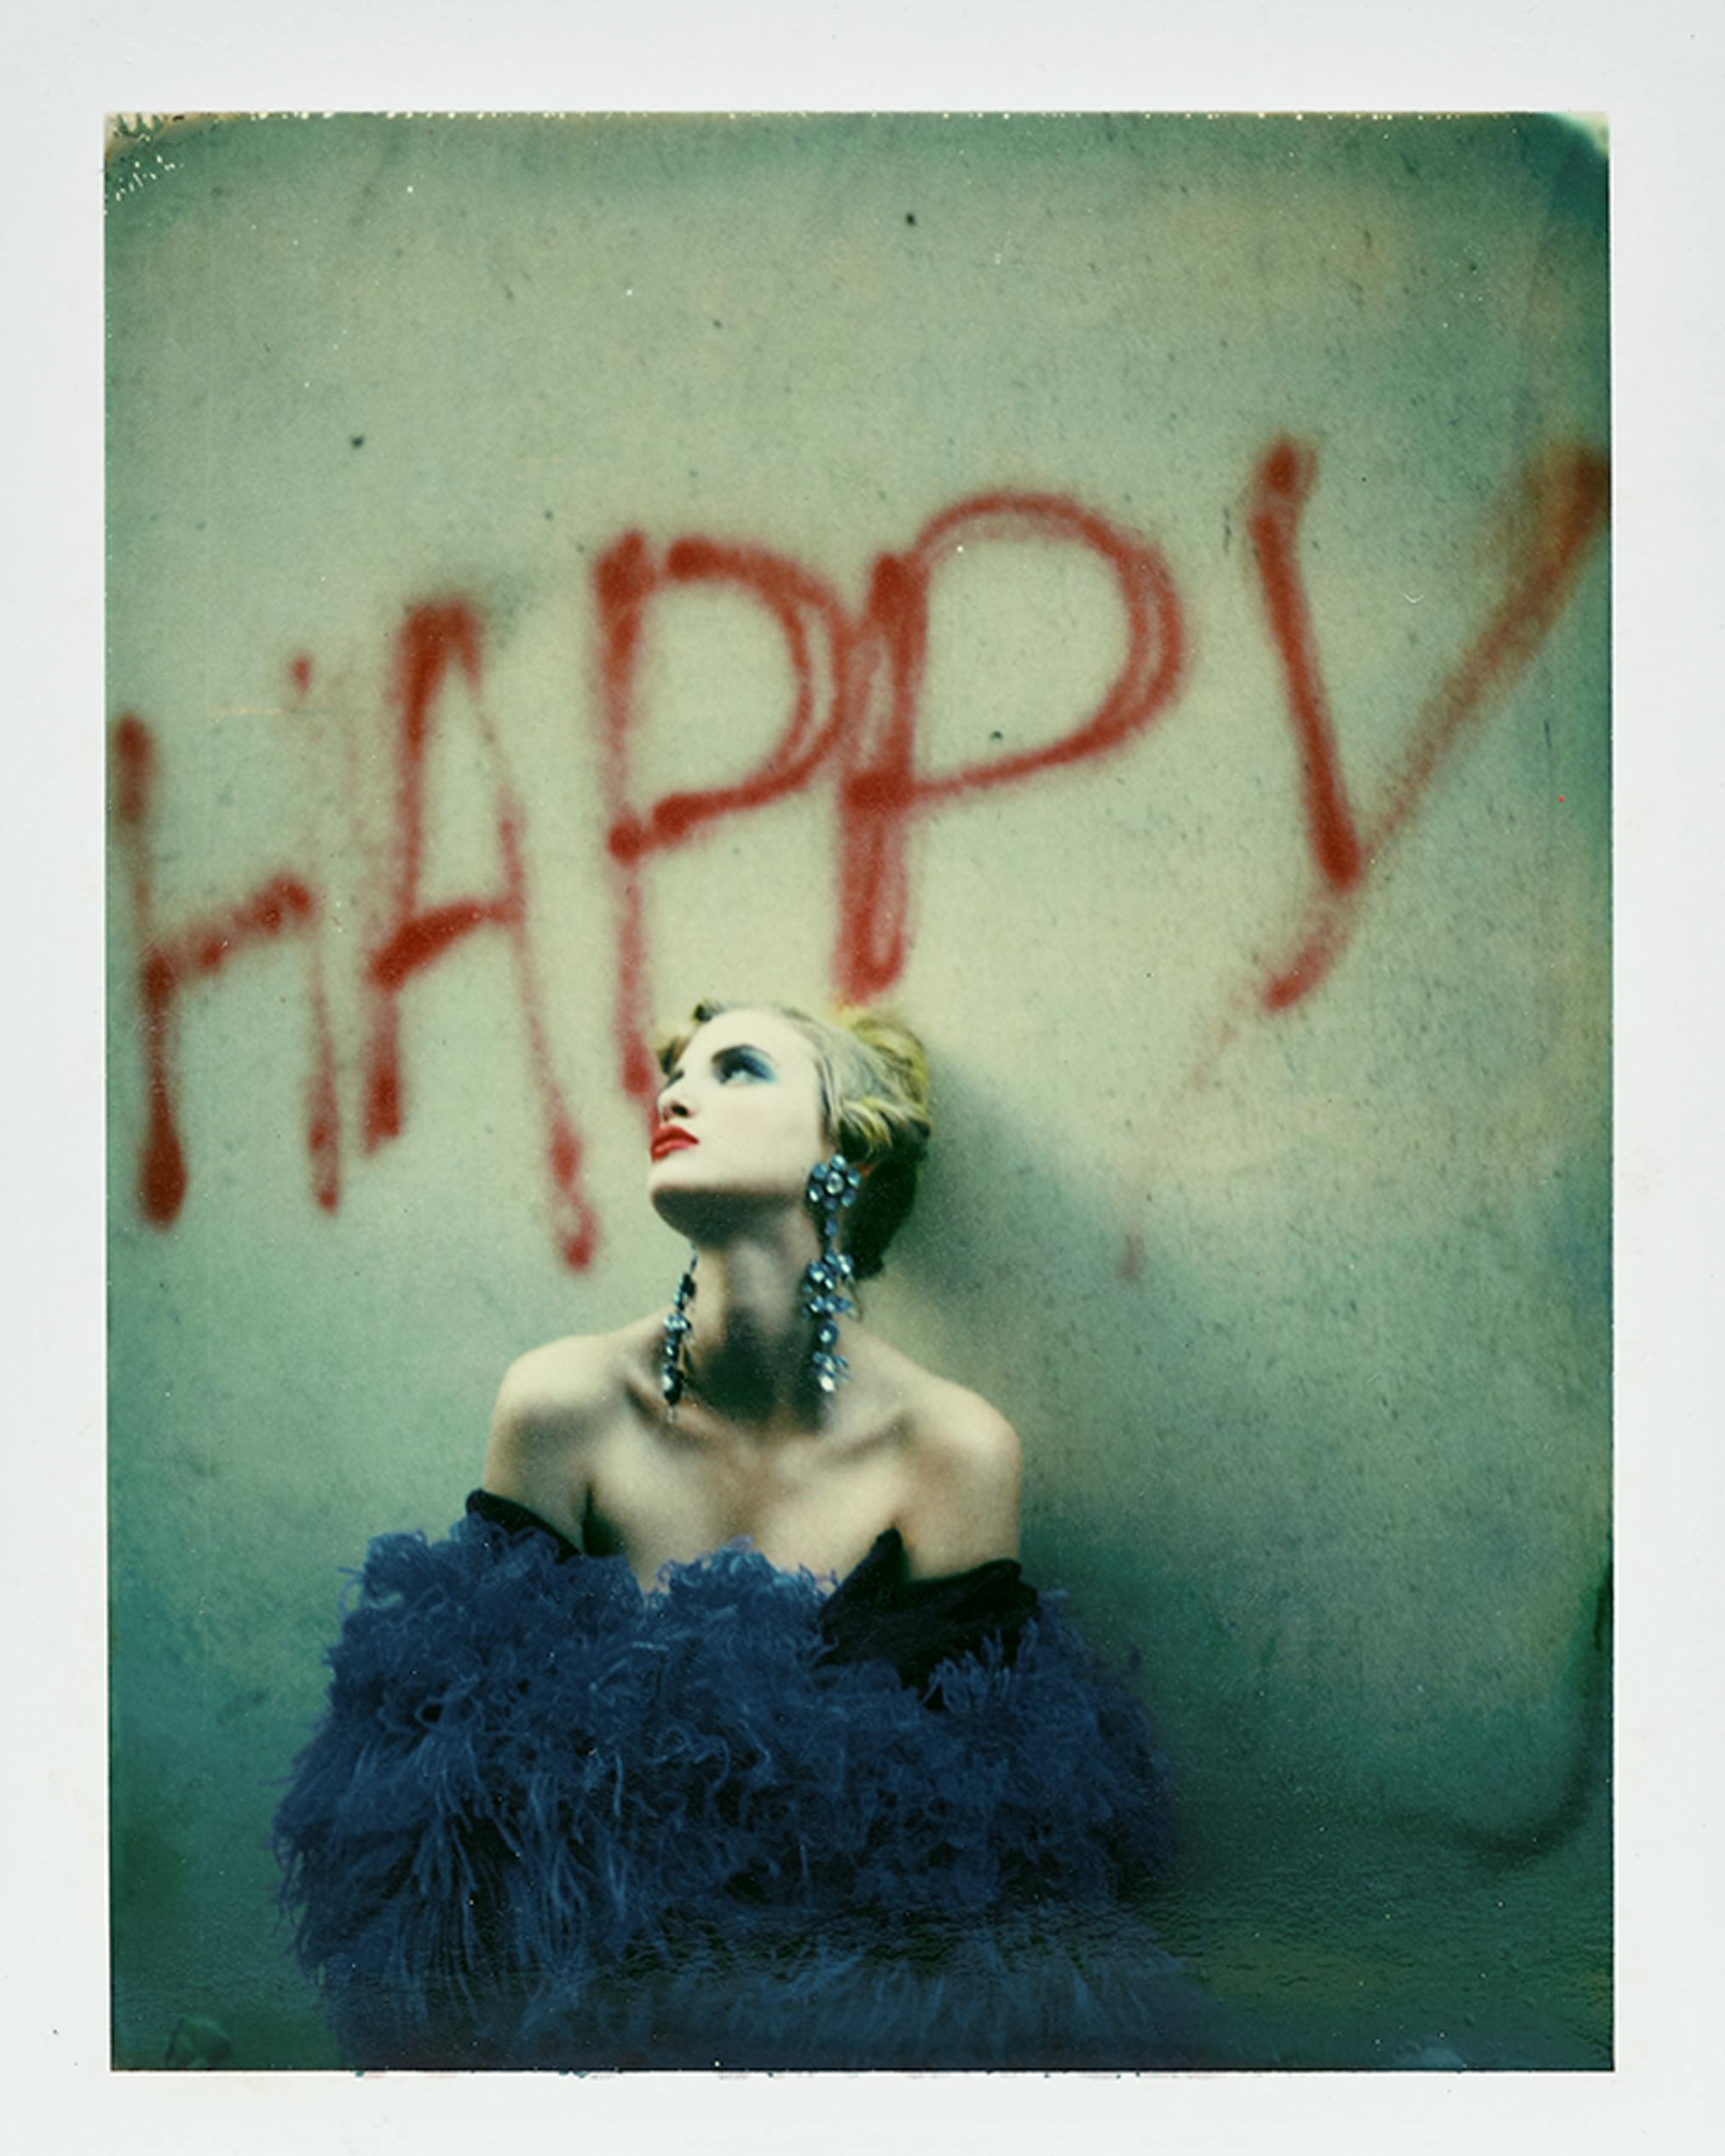 Happy ! Nadja Auermann, Prague, 1994